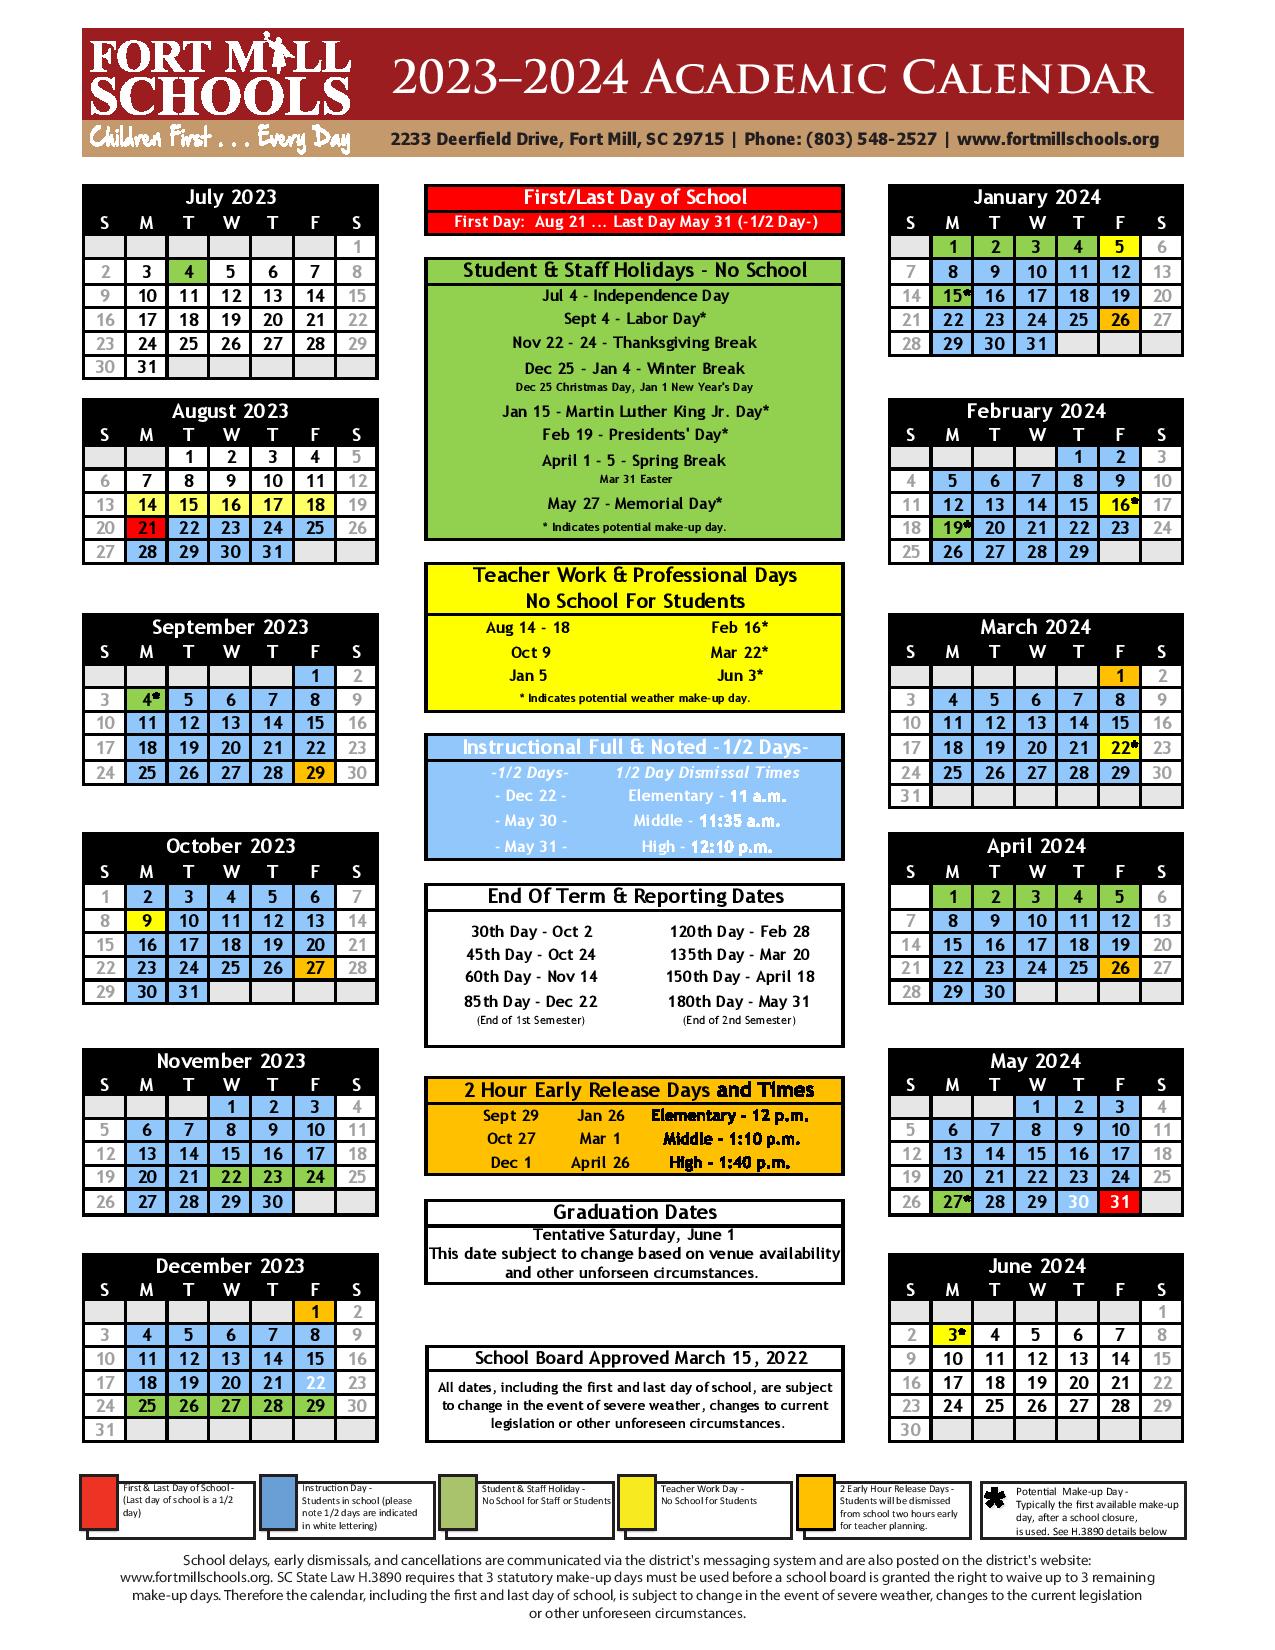 Fort Mill School District Calendar 